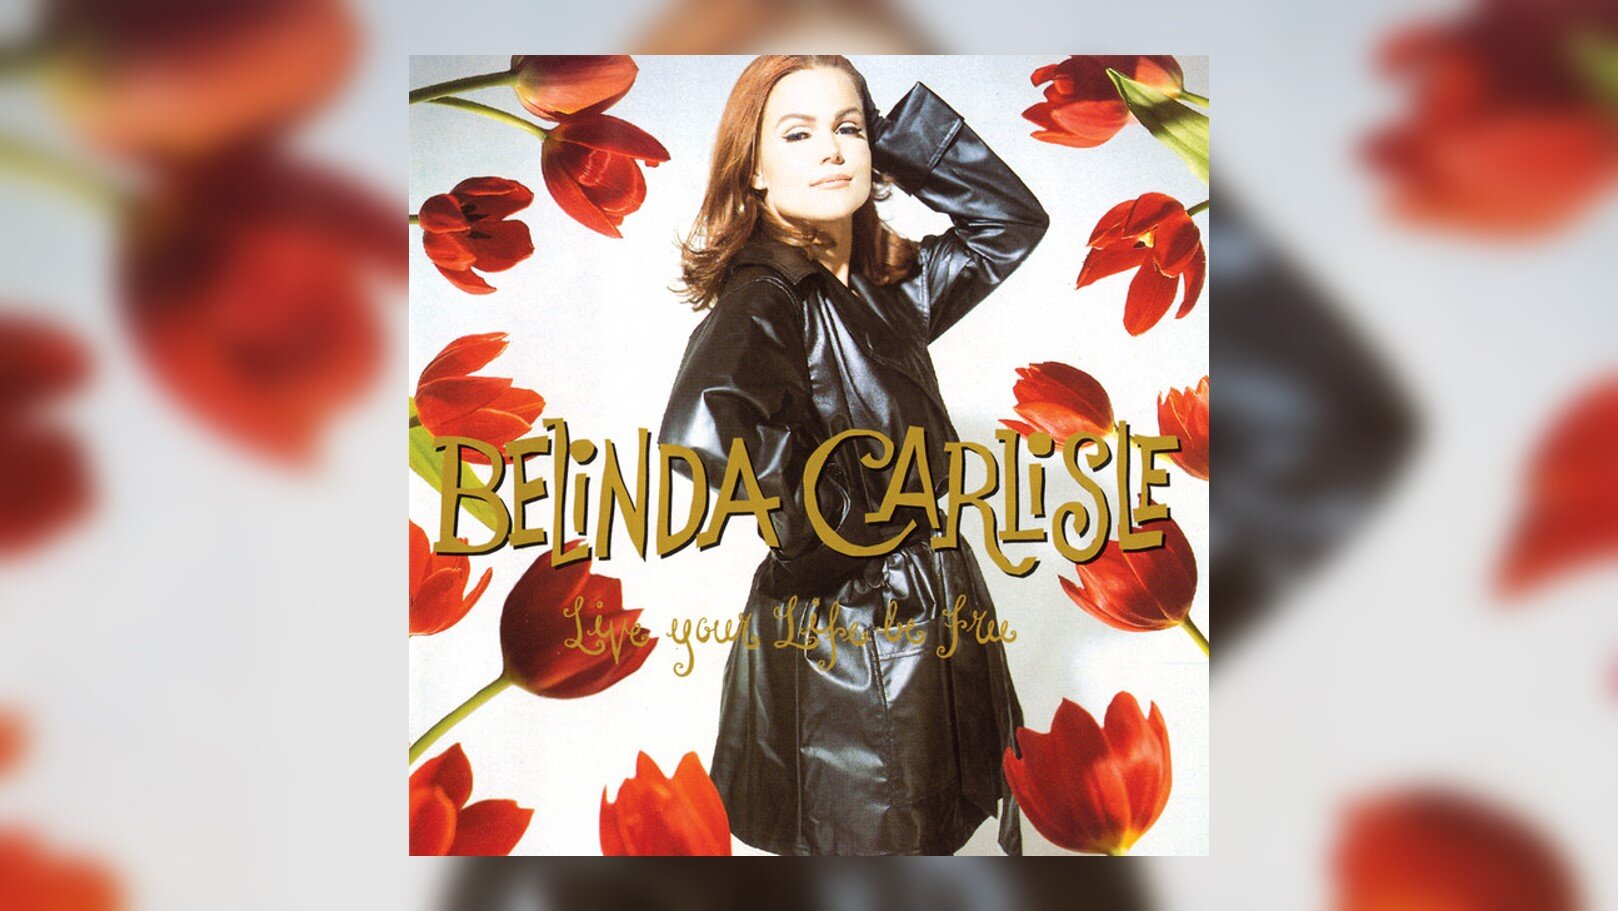 Lest We Forget Revisiting Belinda Carlisle’s 1991 Album ‘live Your Life Be Free’